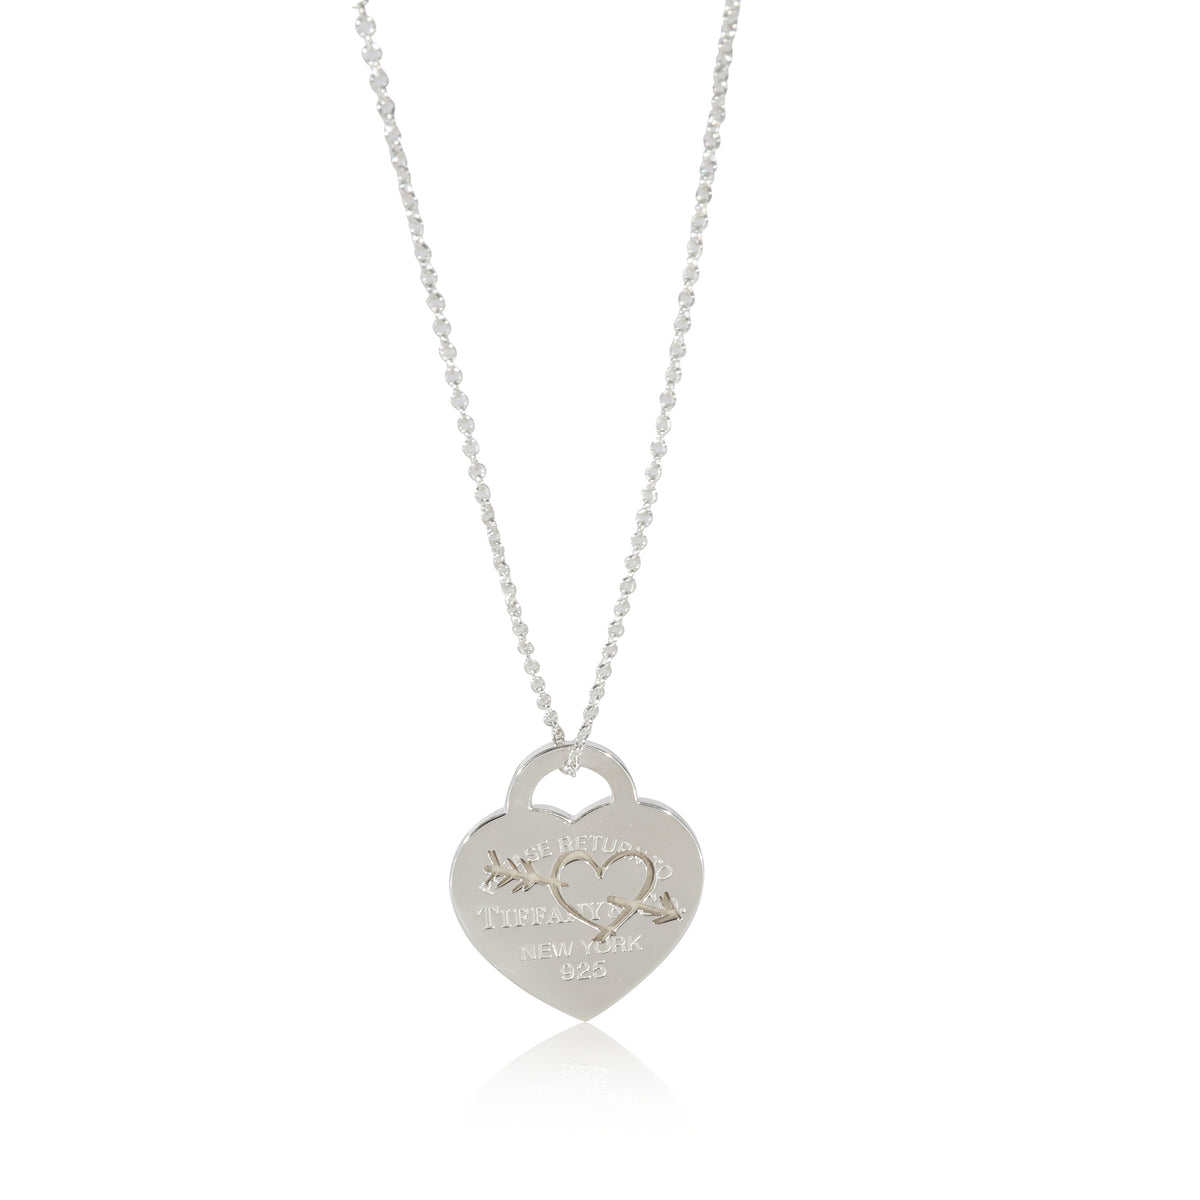 Tiffany & Co. Return To Tiffany Heart & Arrow Pendant in  Sterling Silver